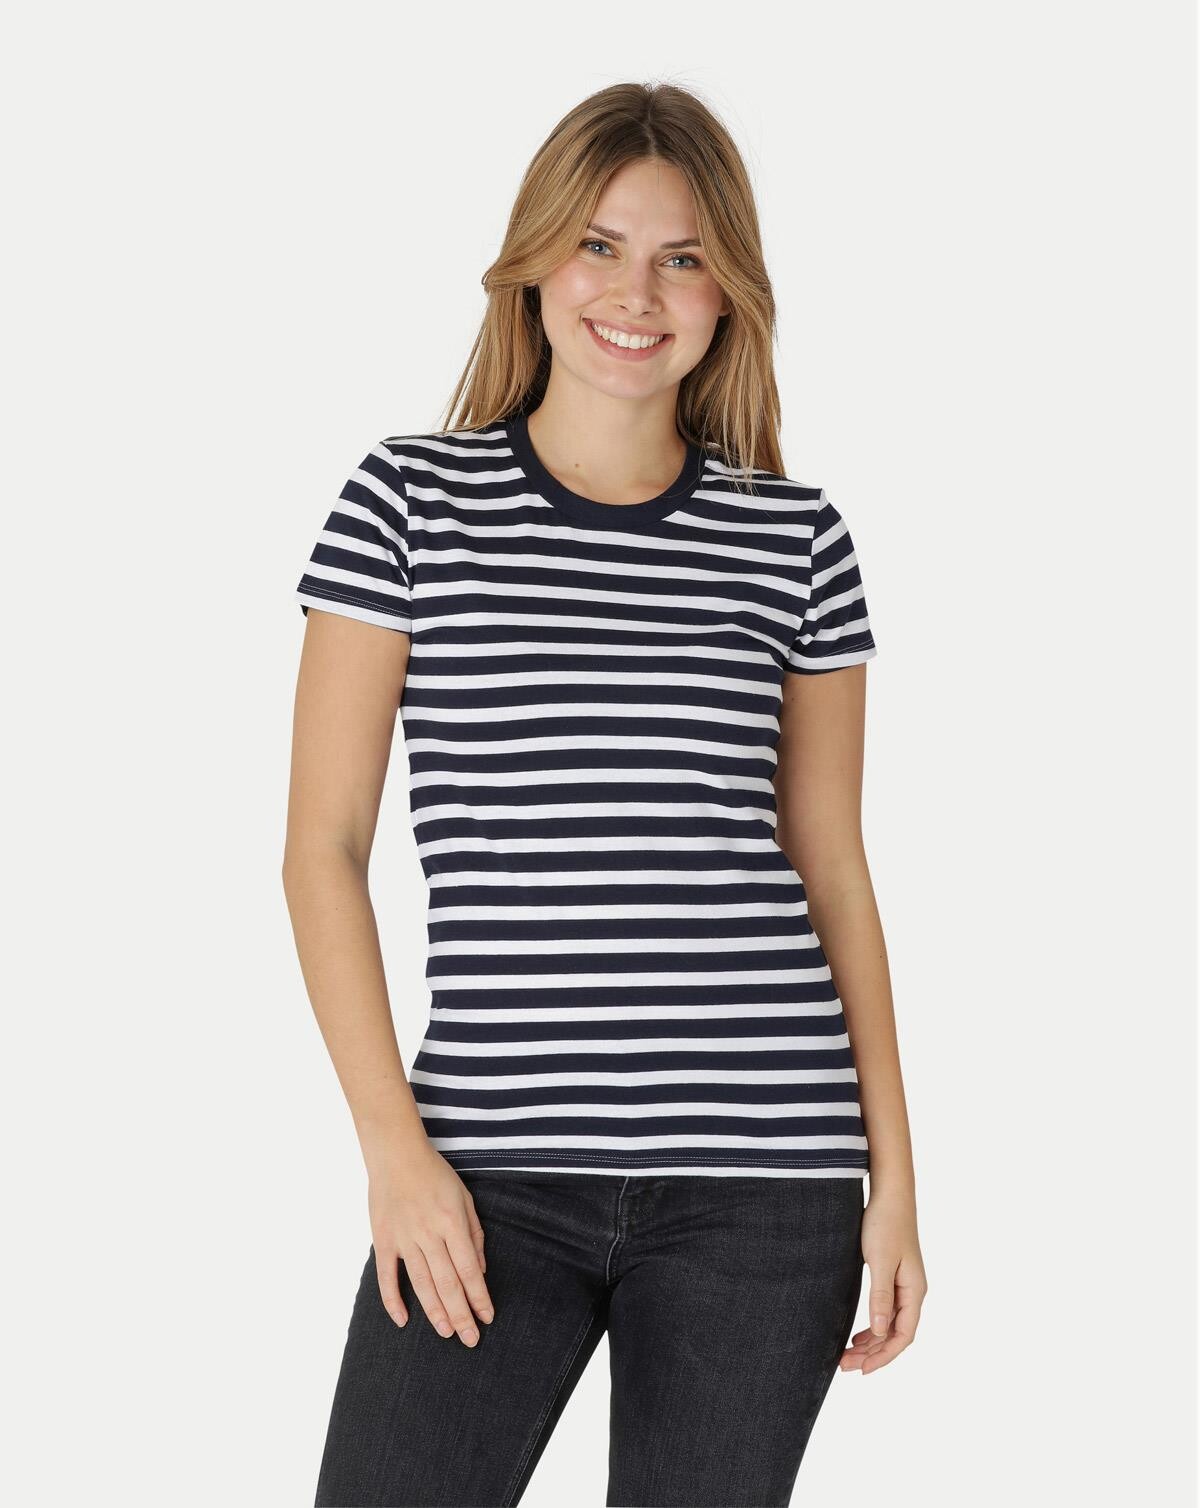 Neutral Økologisk Dame Tætsiddende T-Shirt (Blå / Hvid stribet, 2XL)